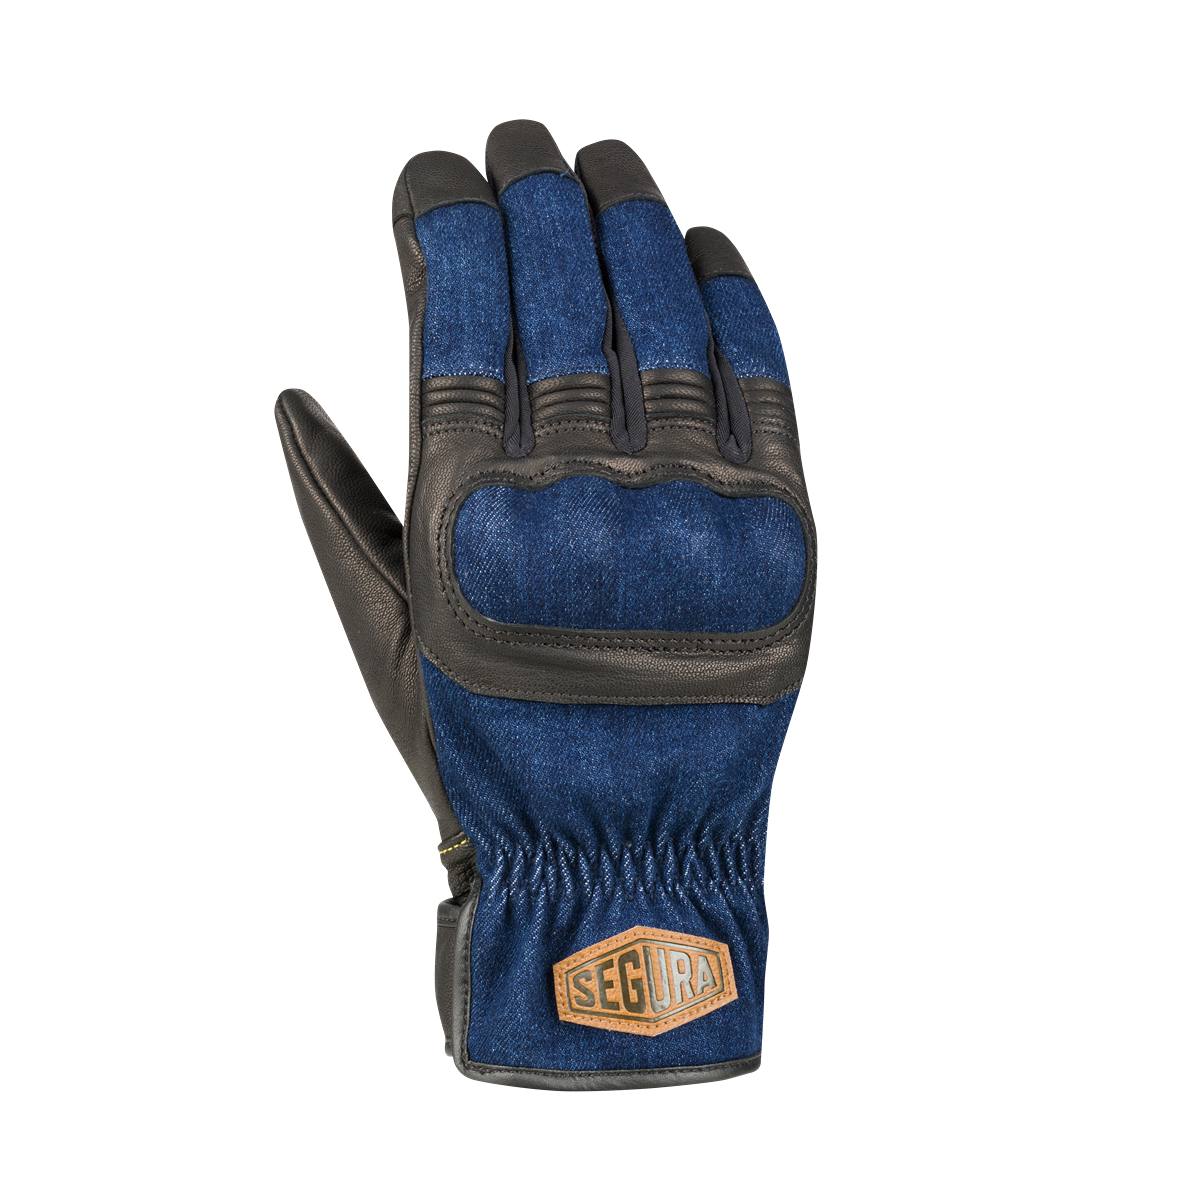 Image of Segura Hunky Gloves Black Blue Size T11 ID 3660815190517